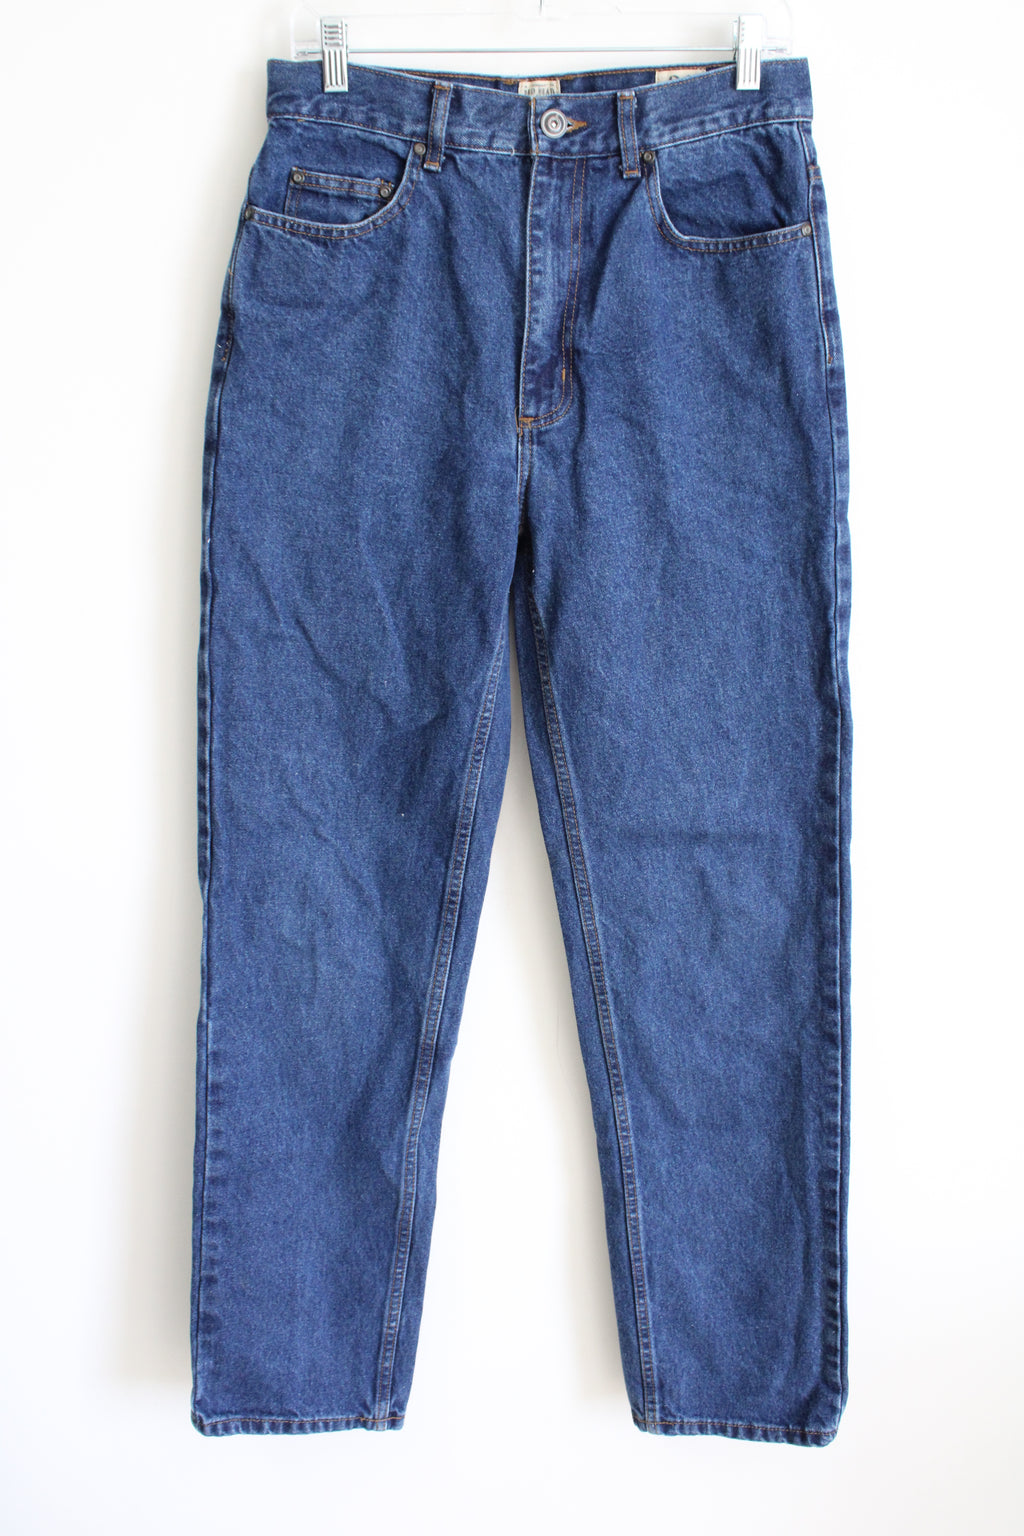 RedHead Brand Co. Blue Jeans | 30X32